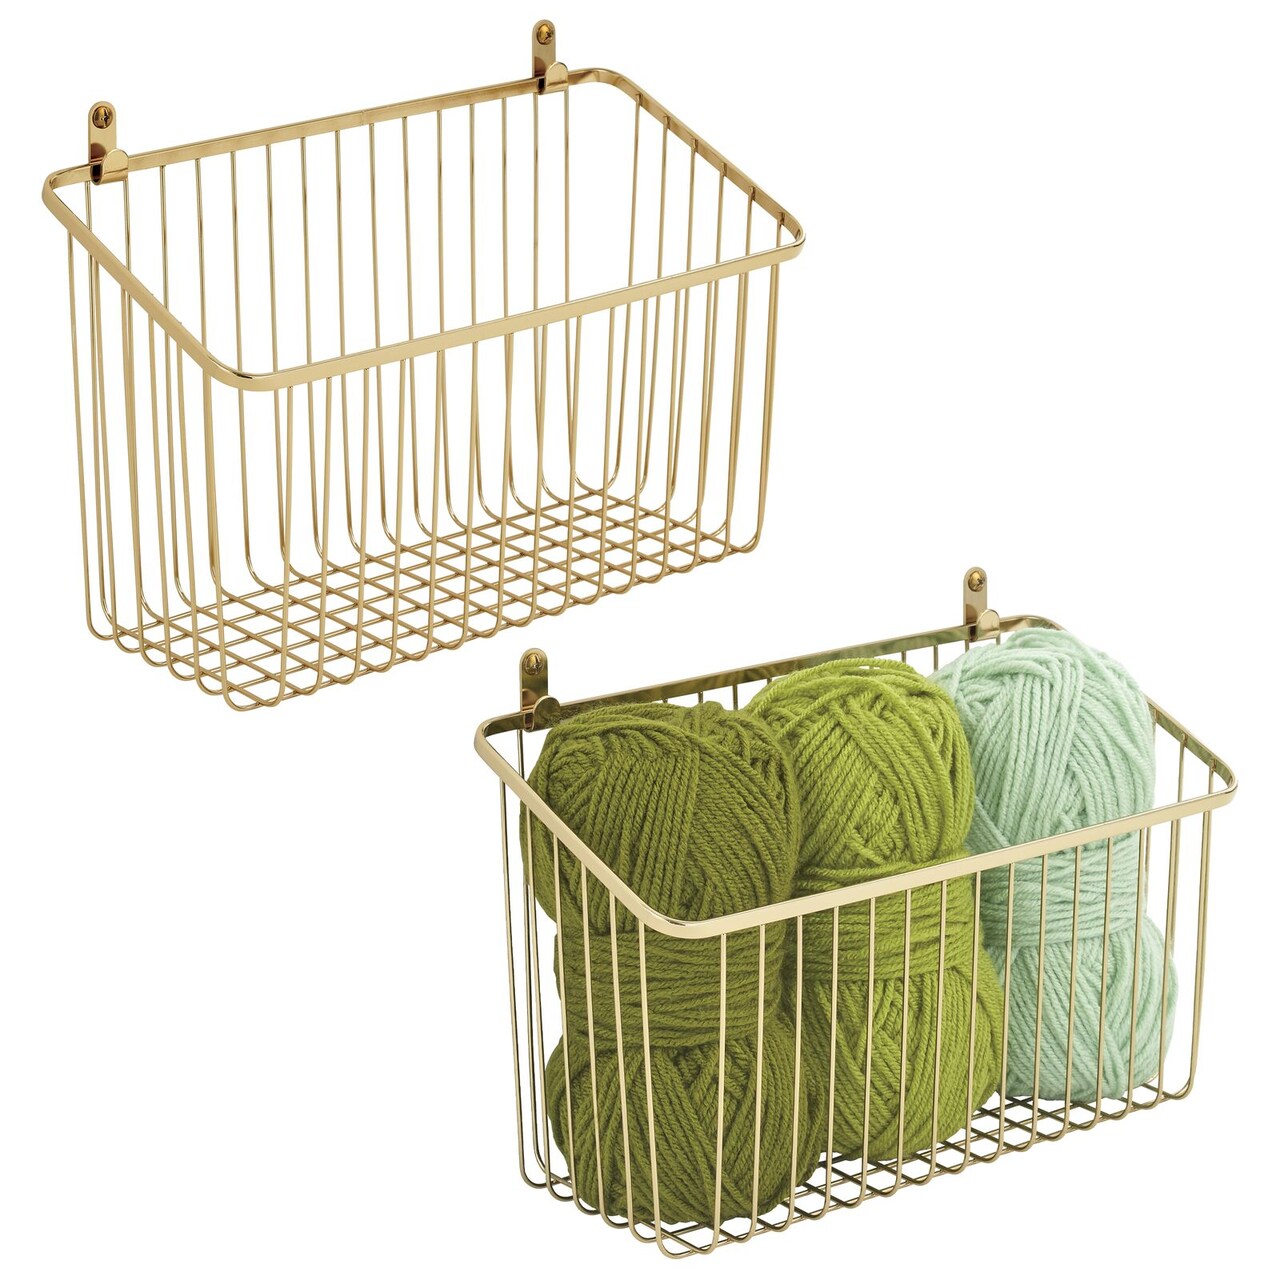 mDesign Metal Wall Mount Hanging Basket for Home Storage, 2 Pack